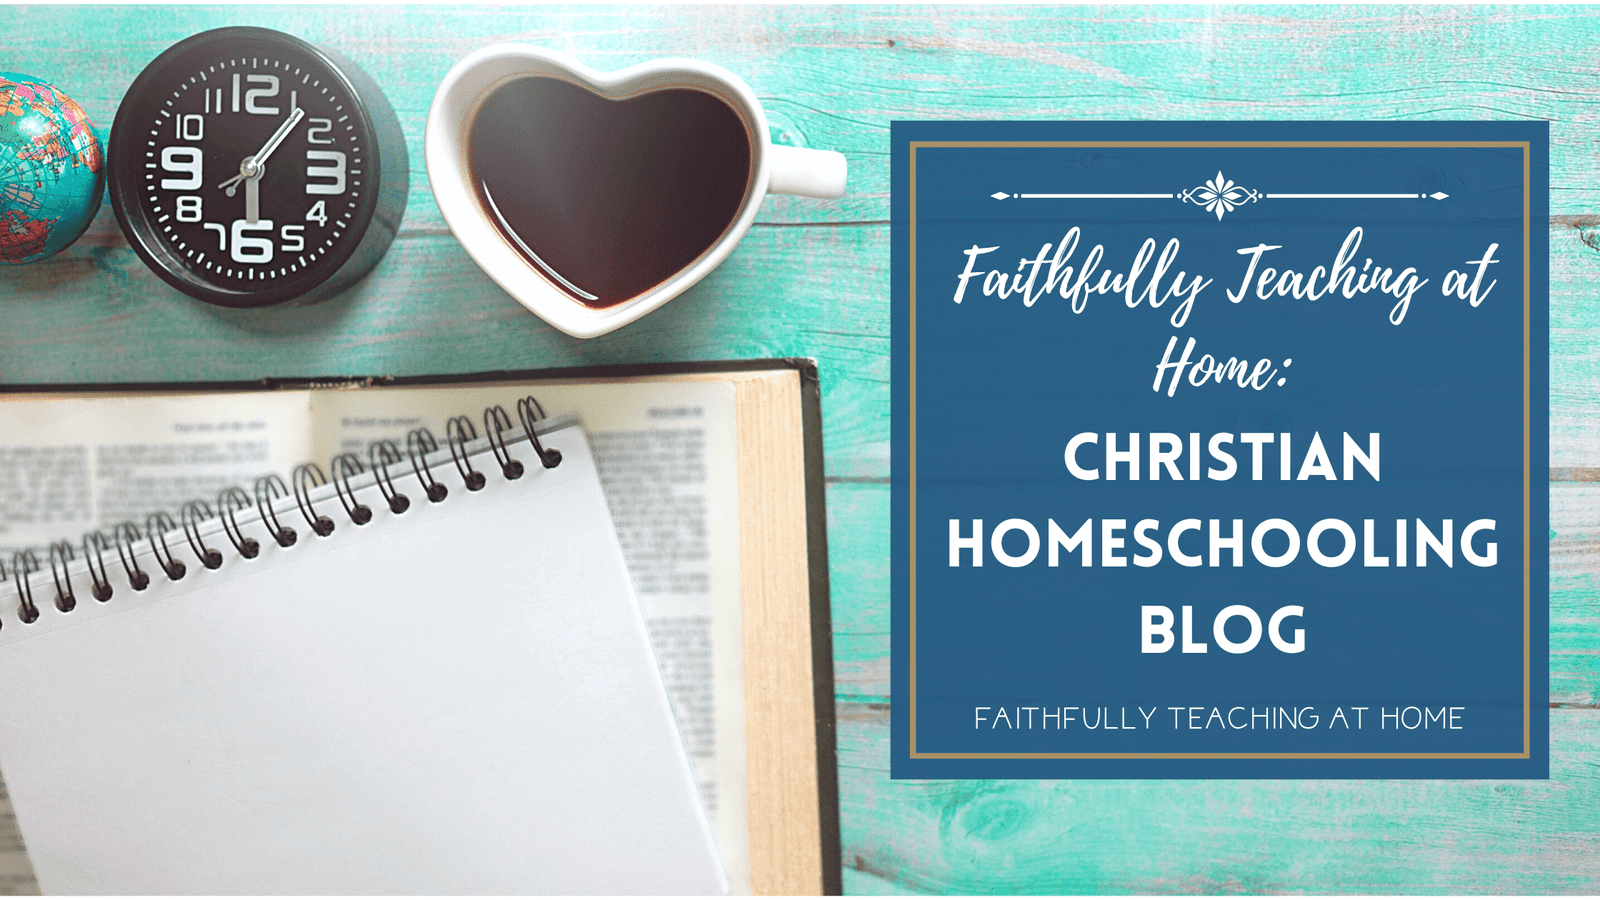 Goals for My Christian Homeschooling Blog